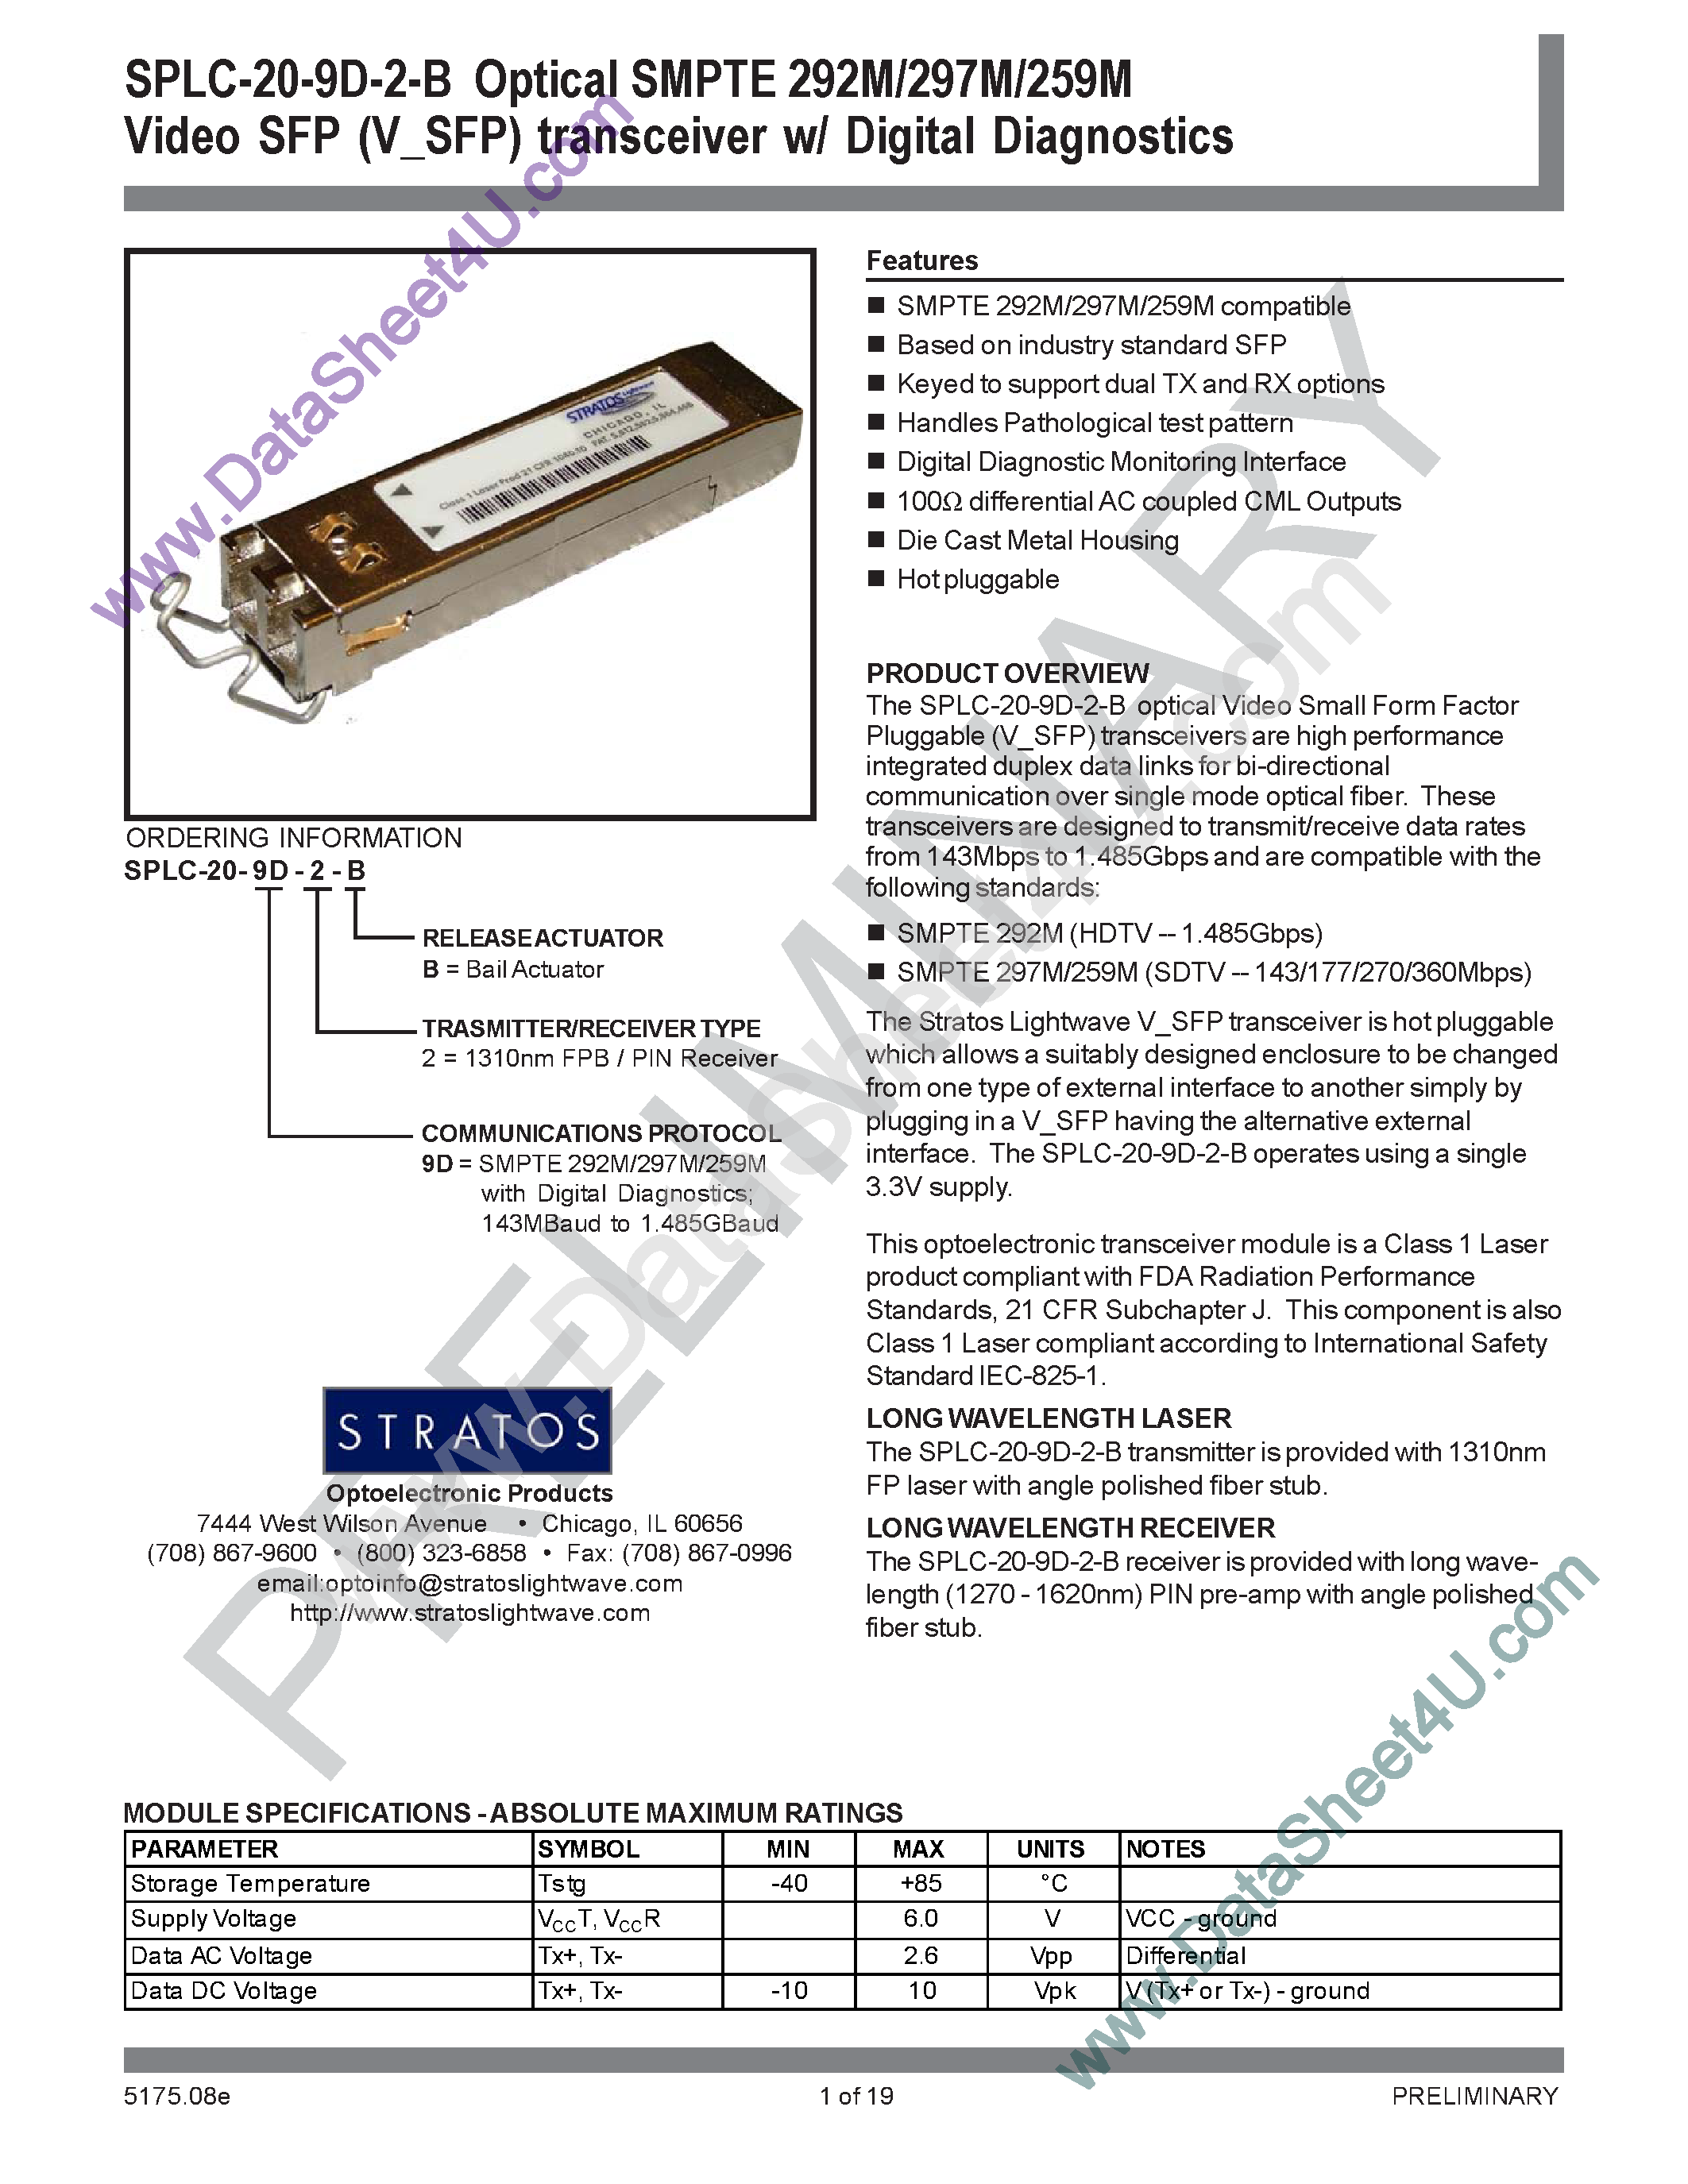 Даташит SPLC-20-9D-2-B - Optical SMPTE Video SFP Transceiver страница 1